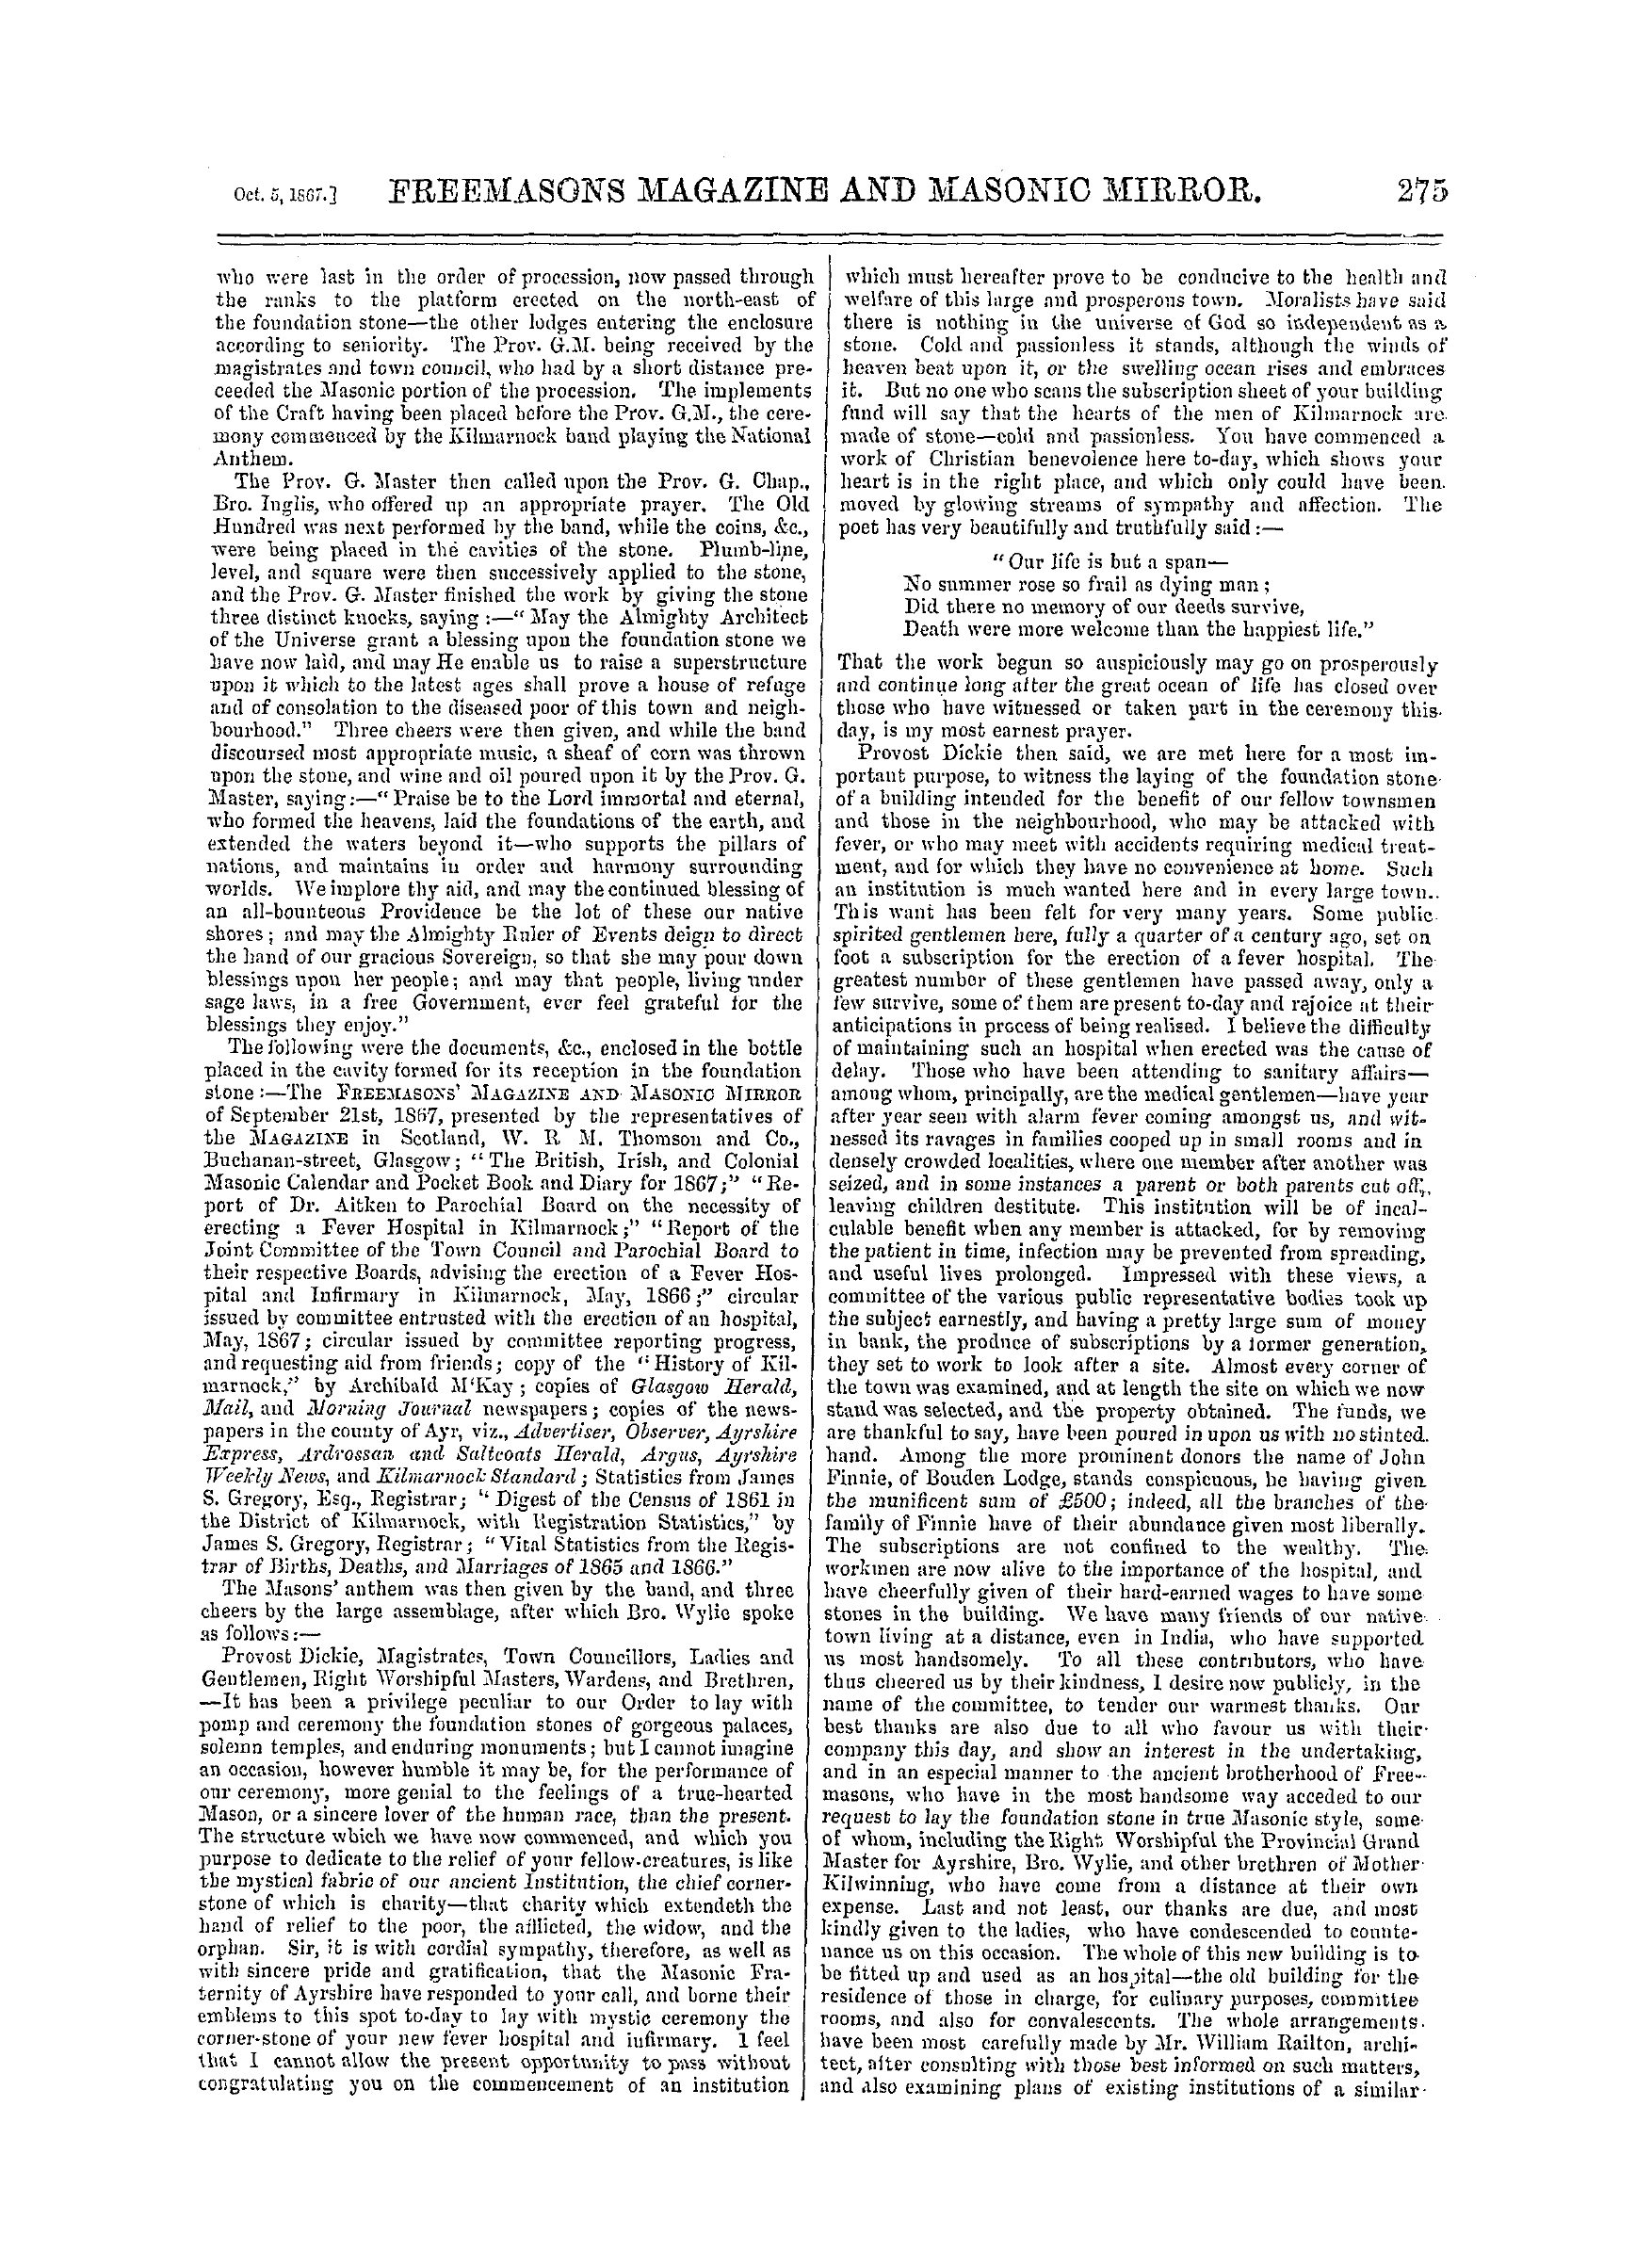 The Freemasons' Monthly Magazine: 1867-10-05 - Scotland.